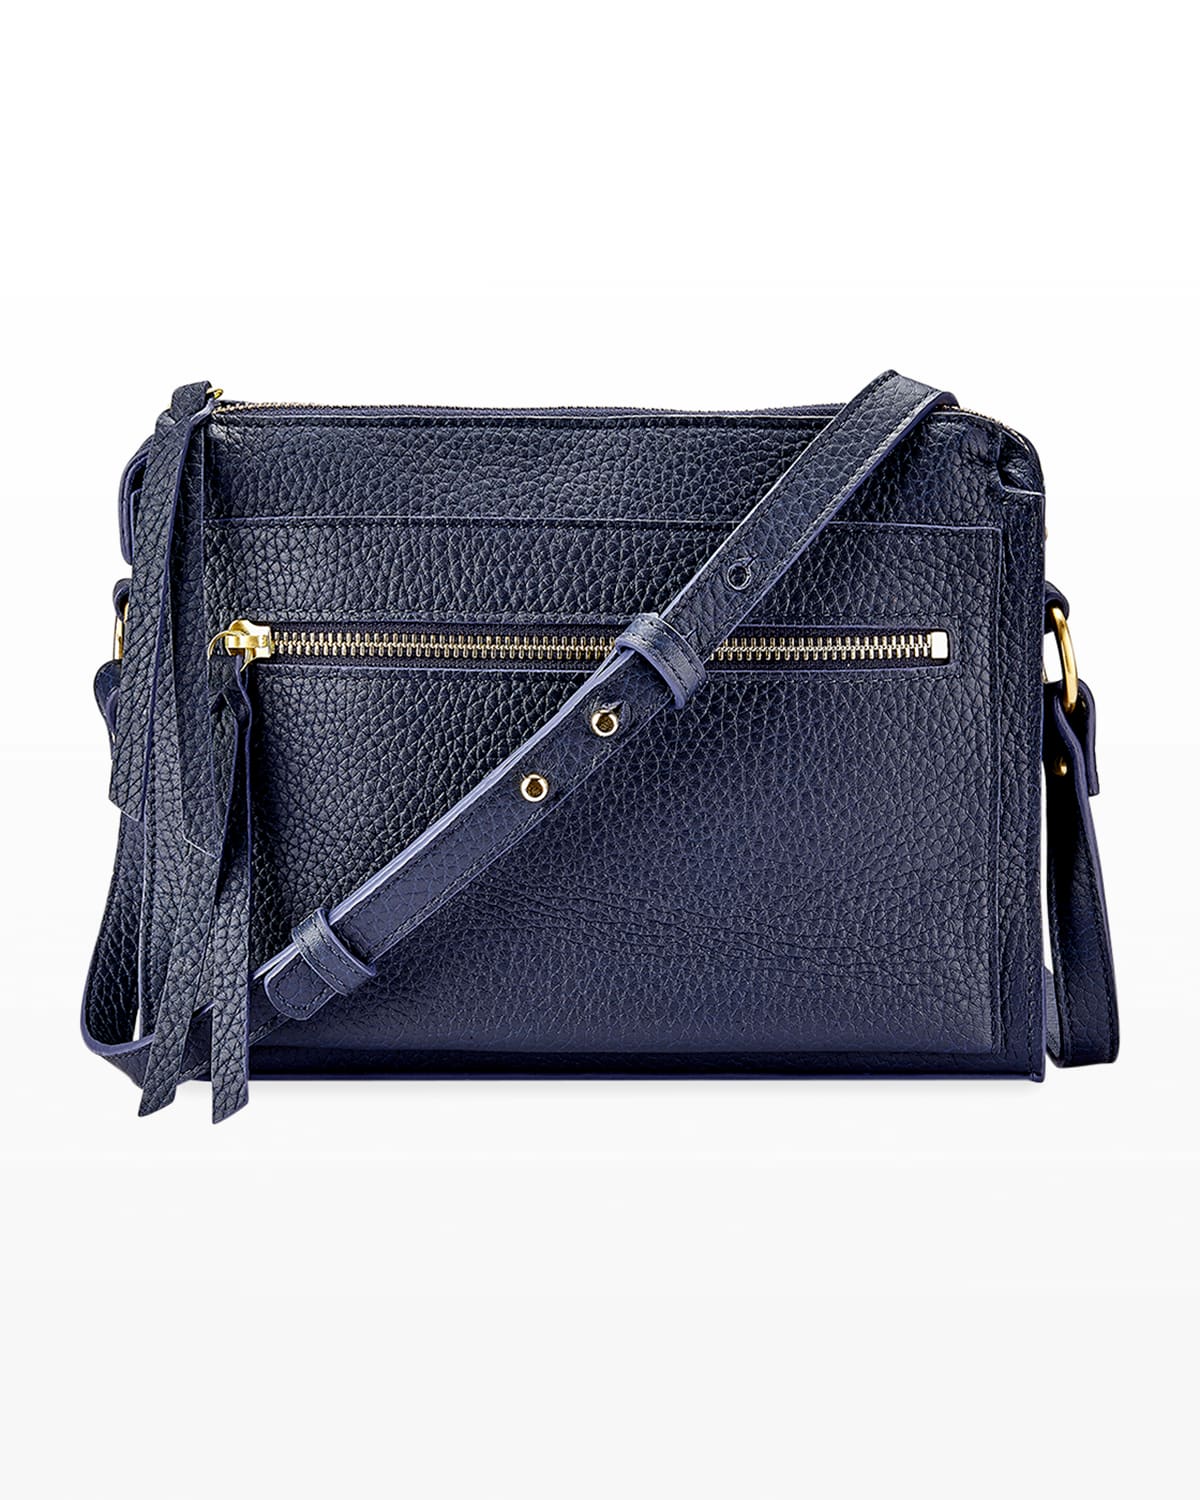 Gigi New York Whitney Pebbled Leather Crossbody Bag